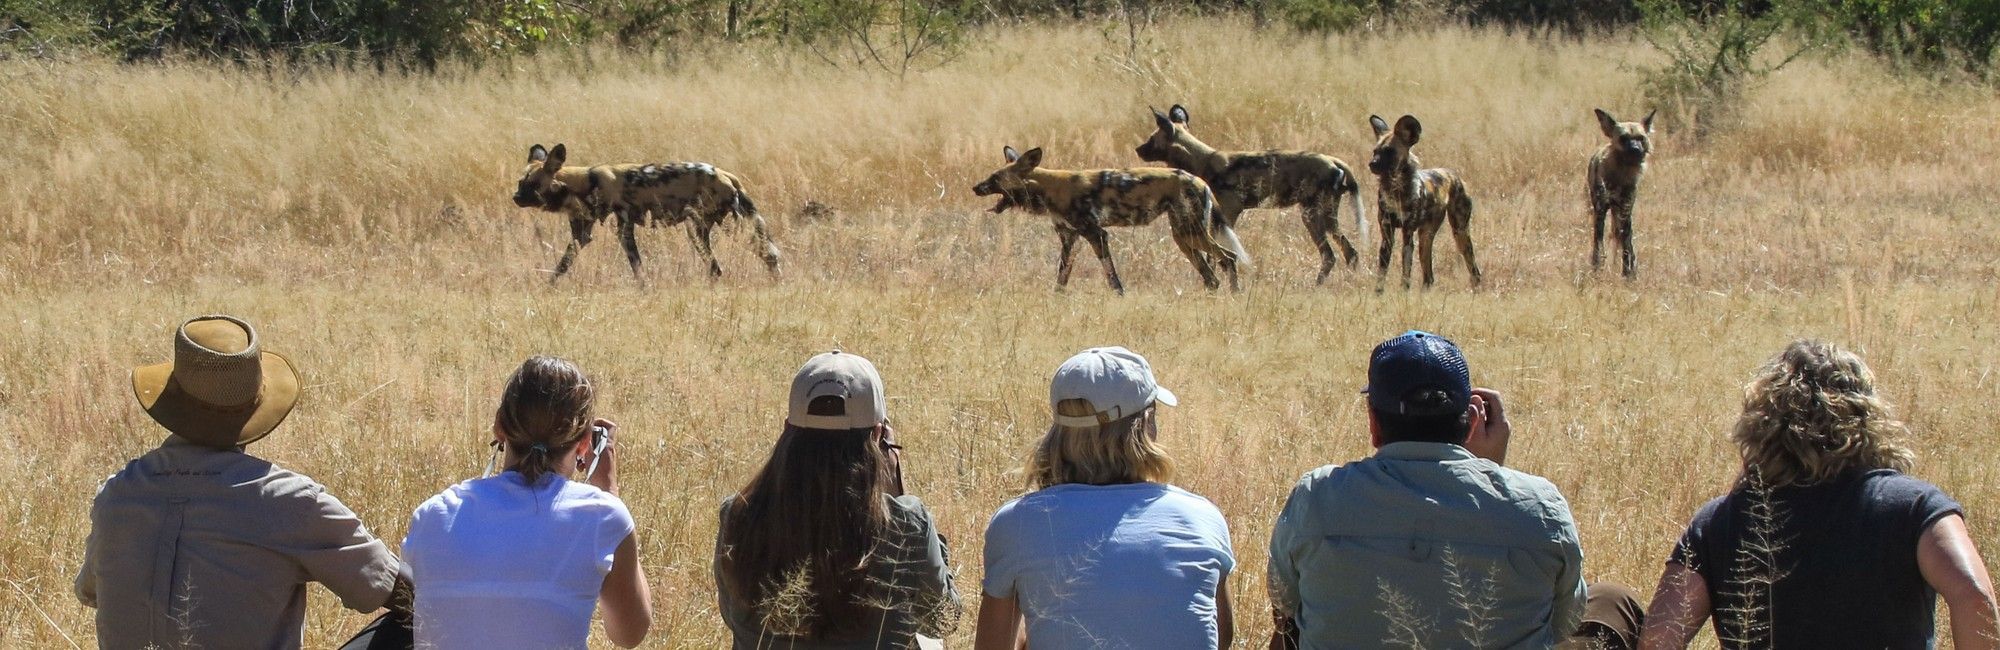 Zimbabwe walking safari